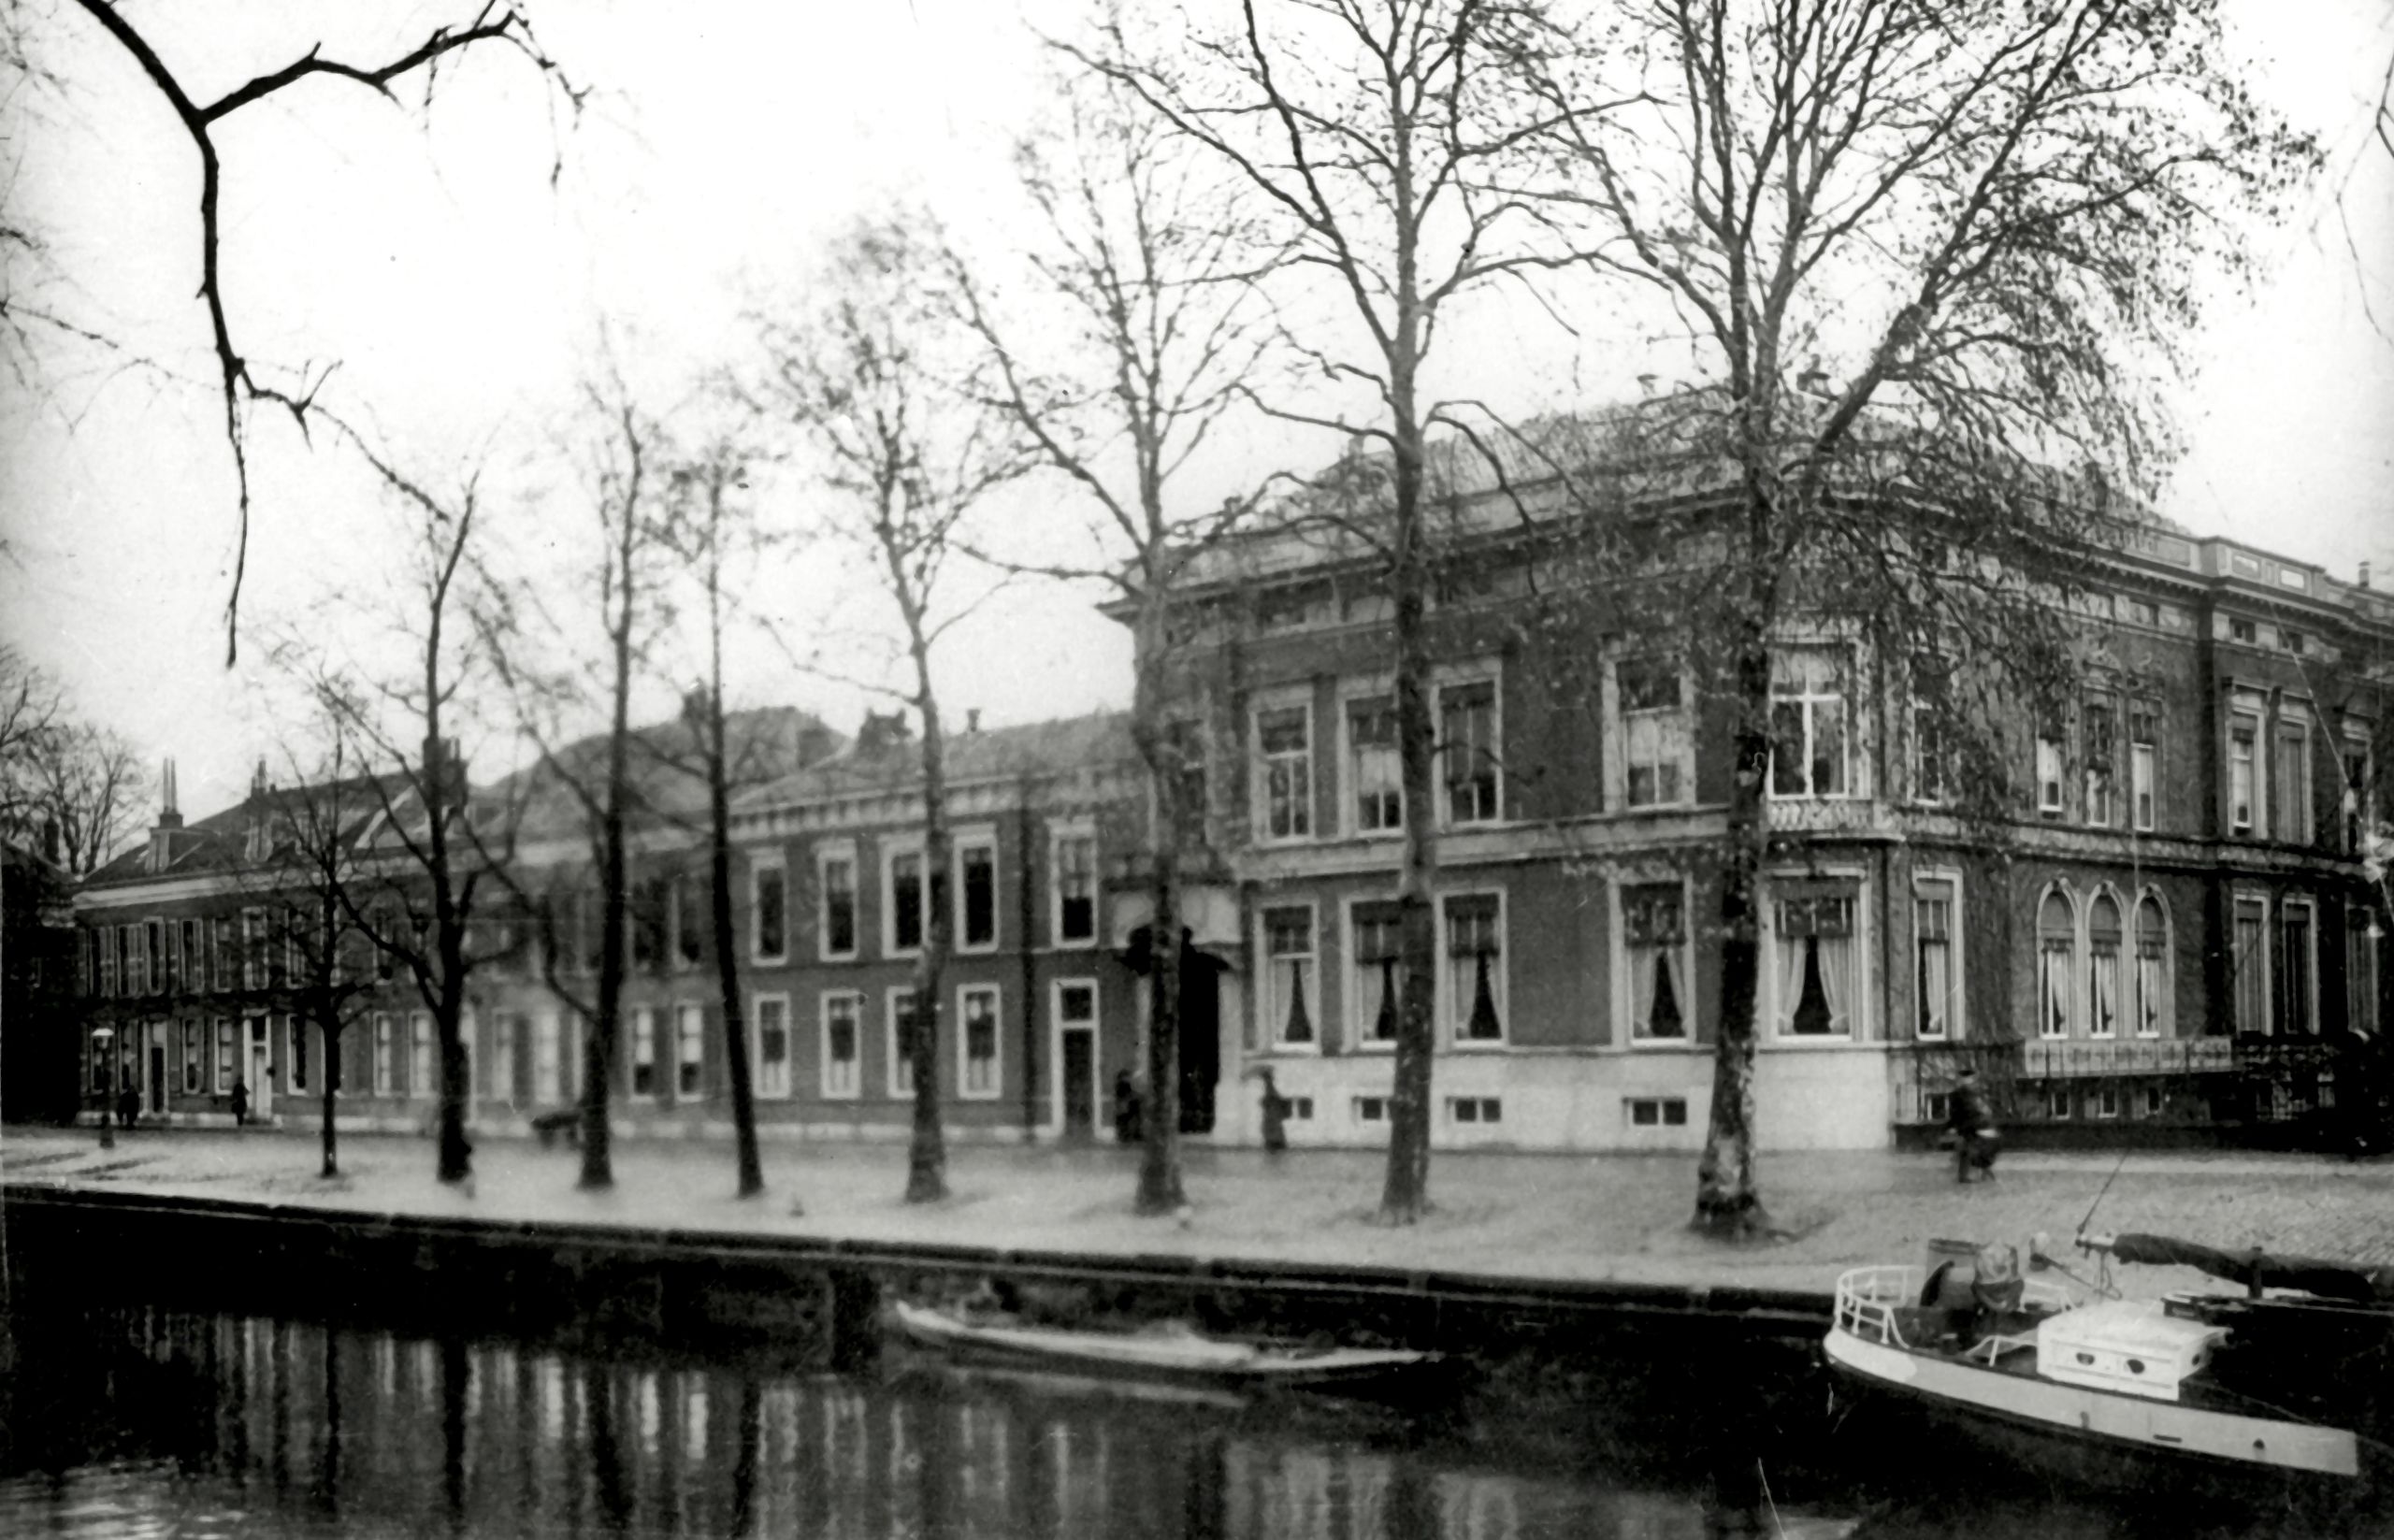 SHV headquarters at the Rijnkade 1, Utrecht, c. 1910